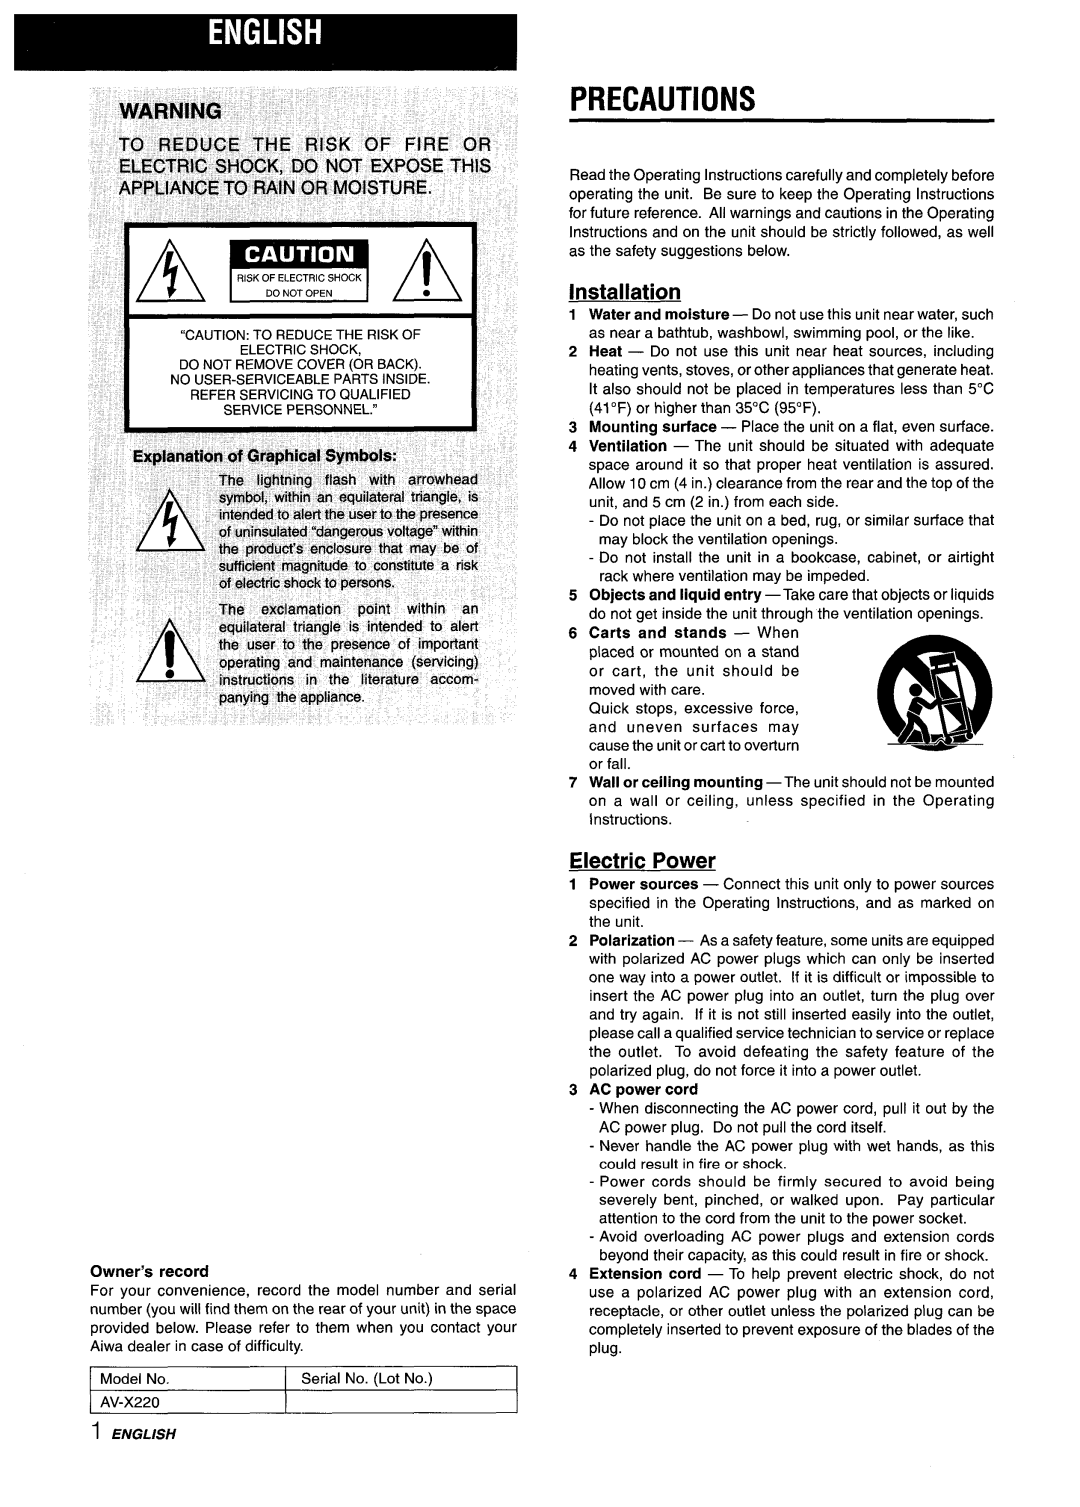 Aiwa AV-X220 manual Precautions, Installation, Electric Power, Owner’s record, AC power cord 